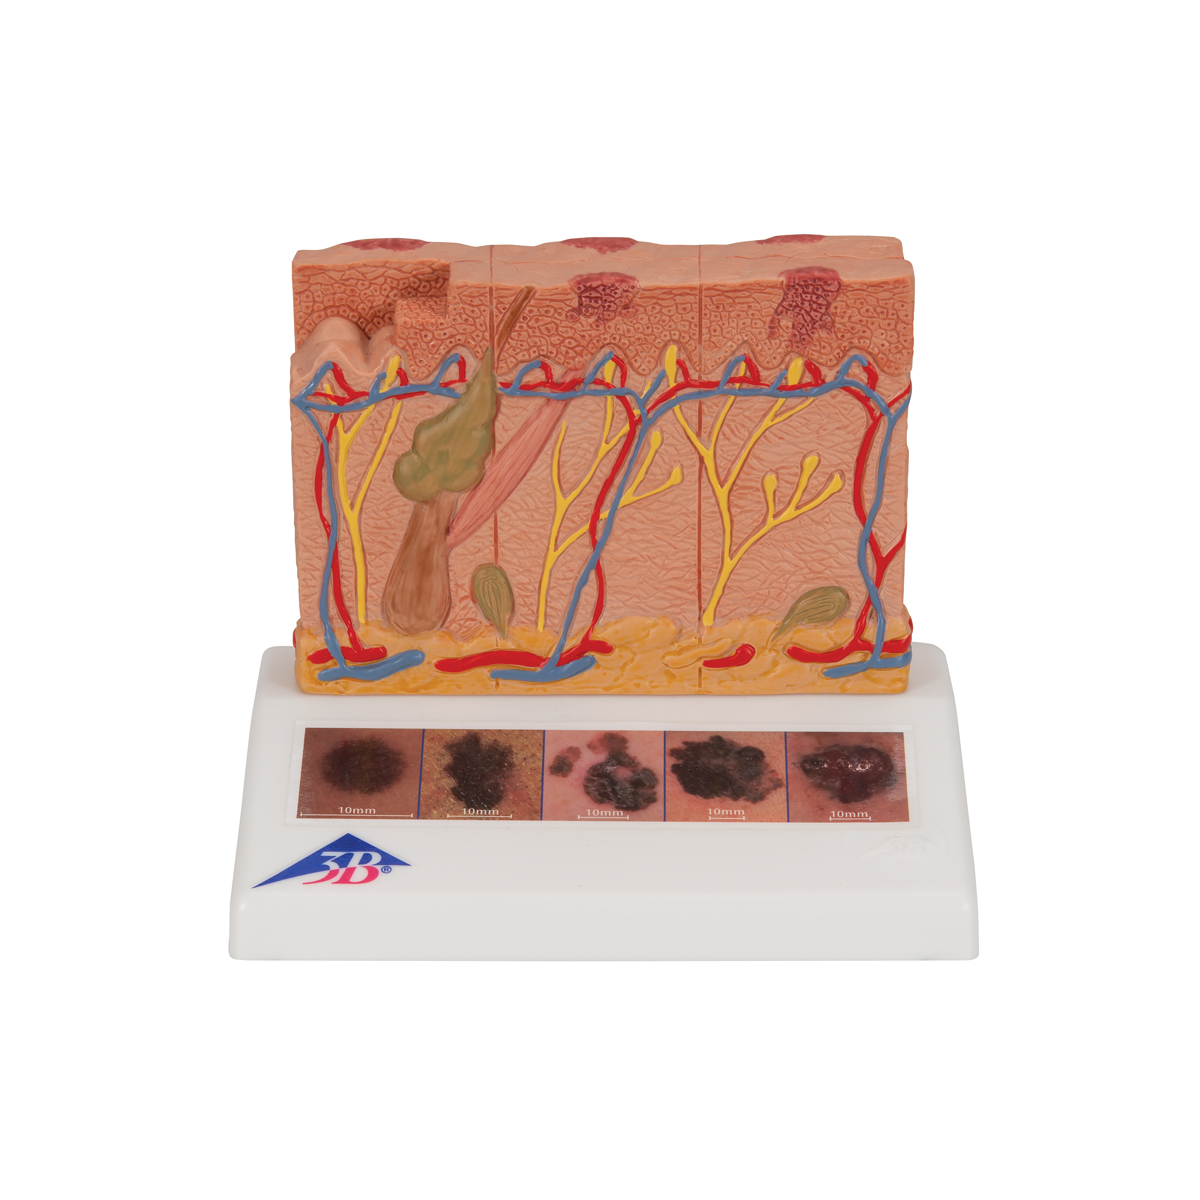 Hautkrebs Modell, 6 Stadien - 3B Smart Anatomy, Bestellnummer 1000293, J15, 3B Scientific